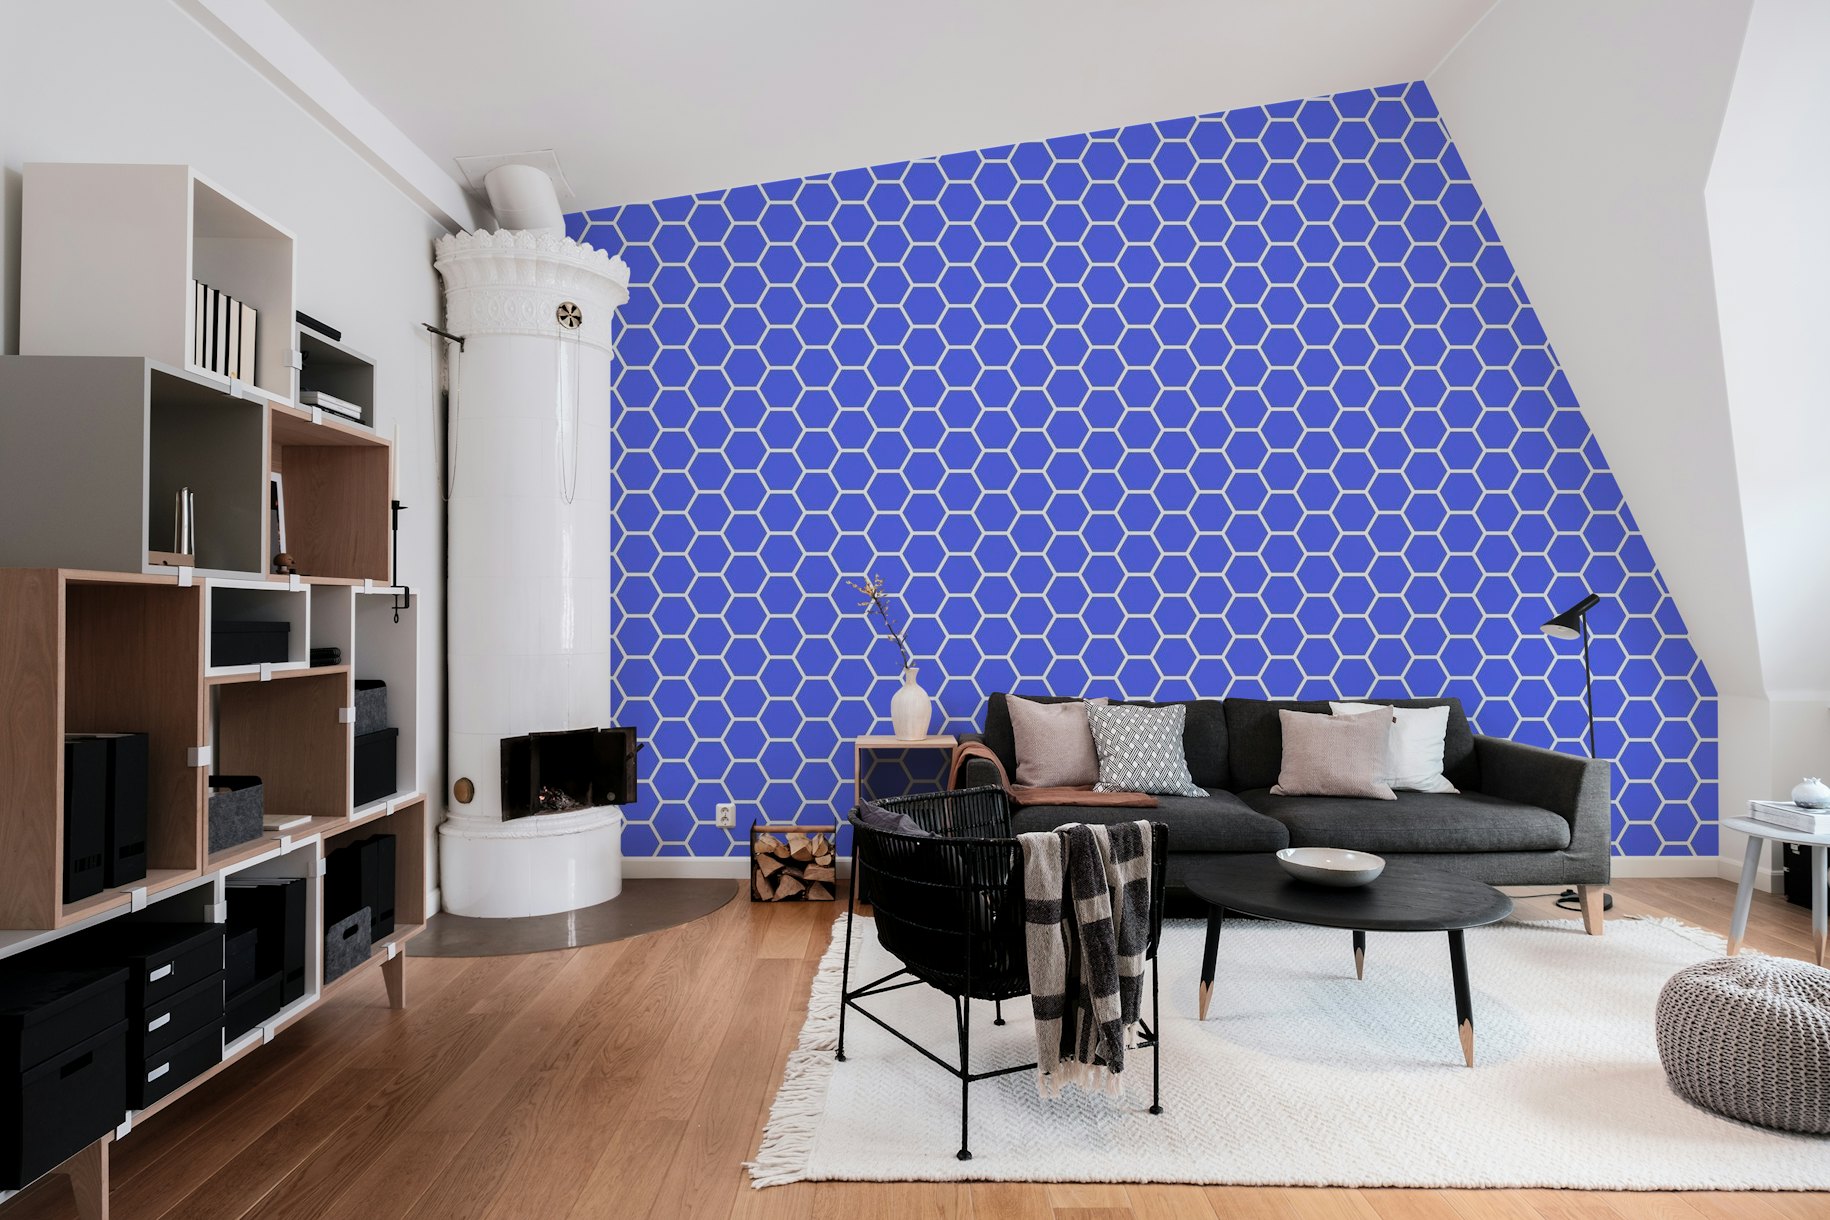 Helles blaues Hexagon-Muster tapete